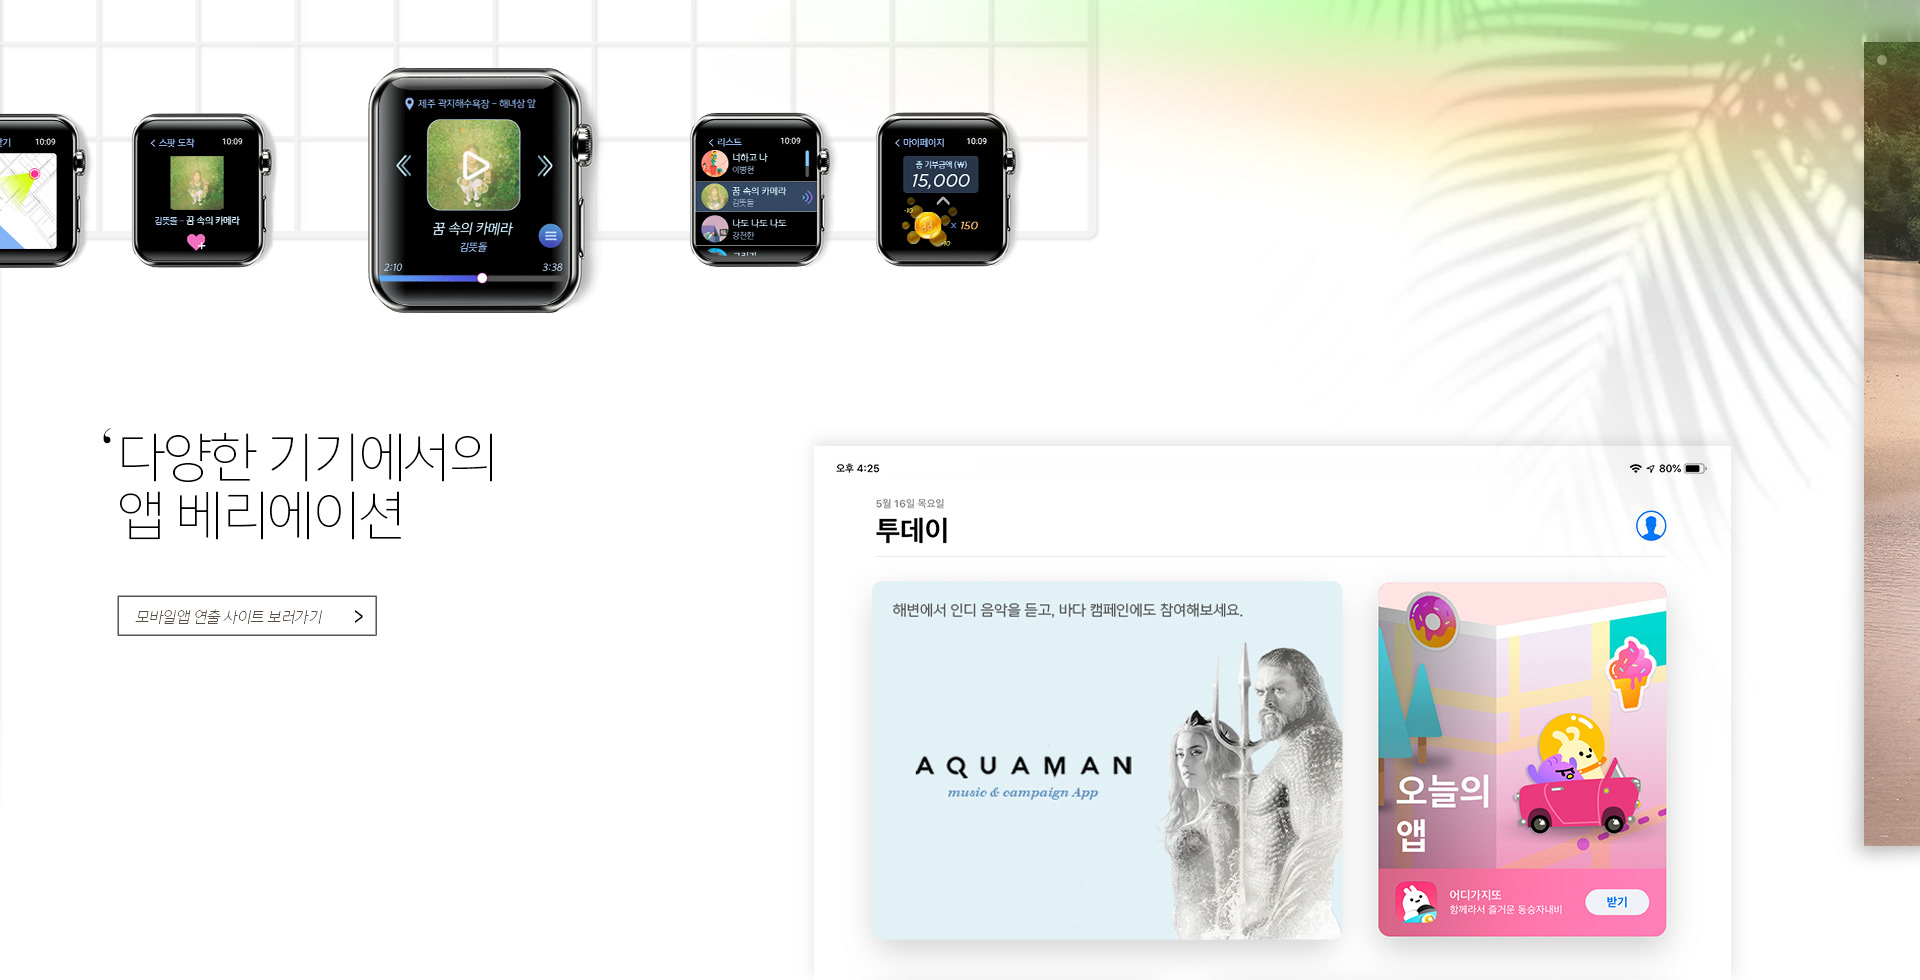 Bokyung Kim - 아쿠아맨 X 해양캠페인 X 인디음악 모바일 앱